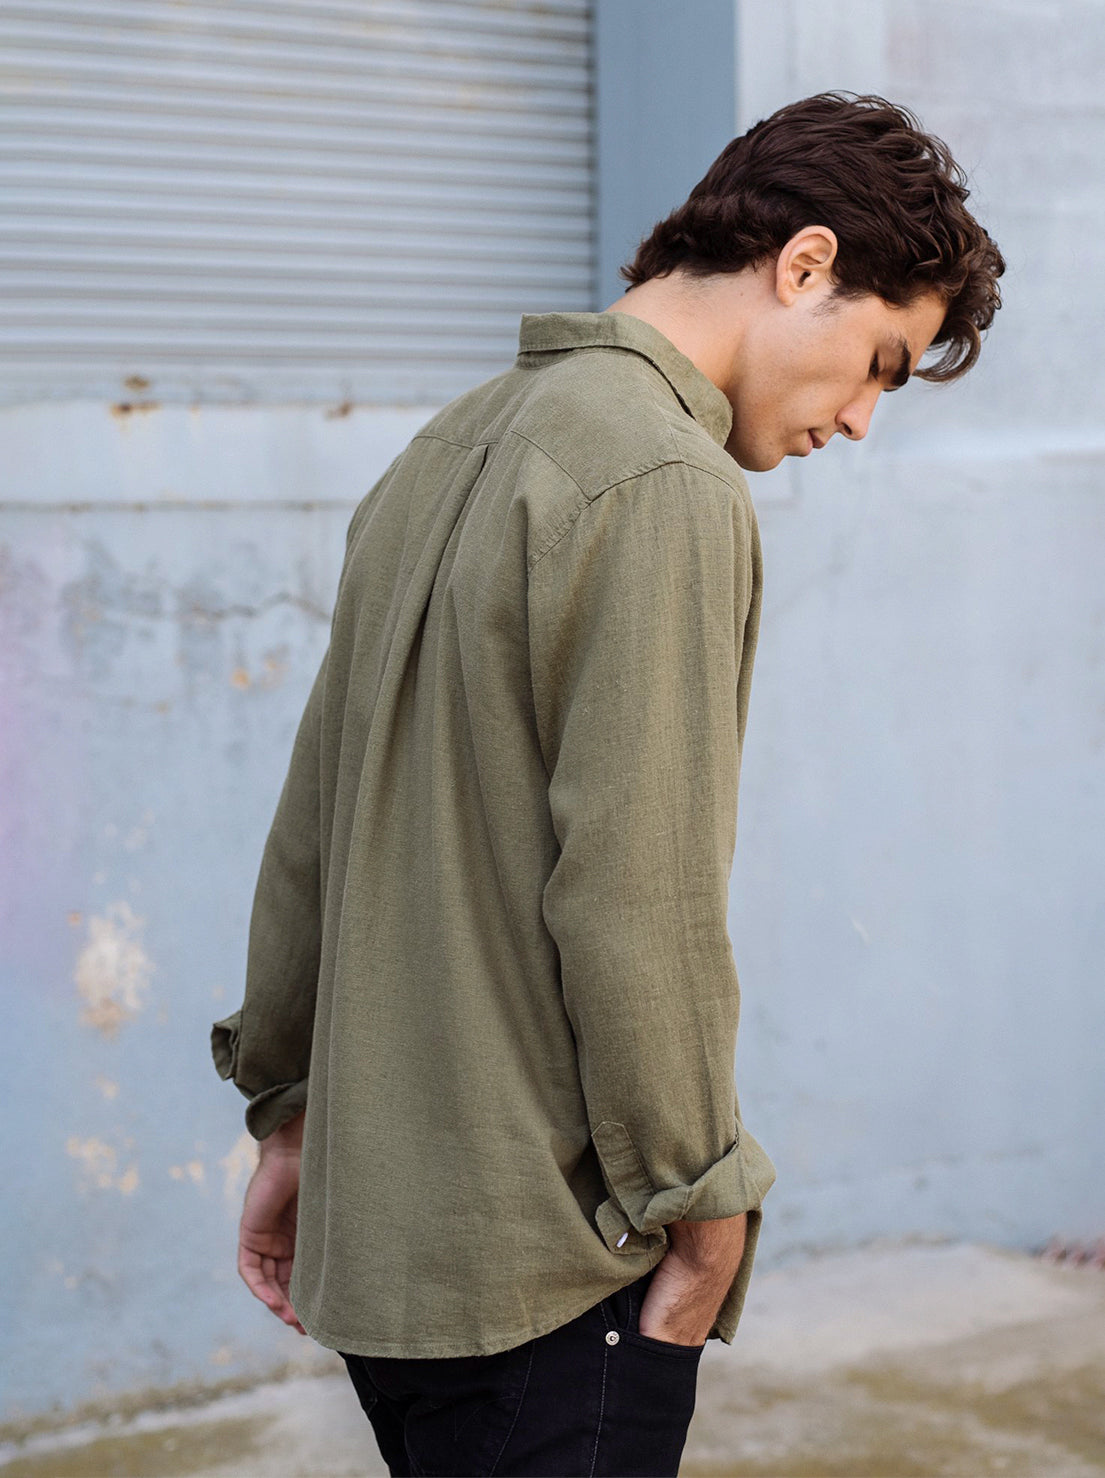 Hemp Clothing Australia - Newtown Shirt - Long Sleeve - Olive